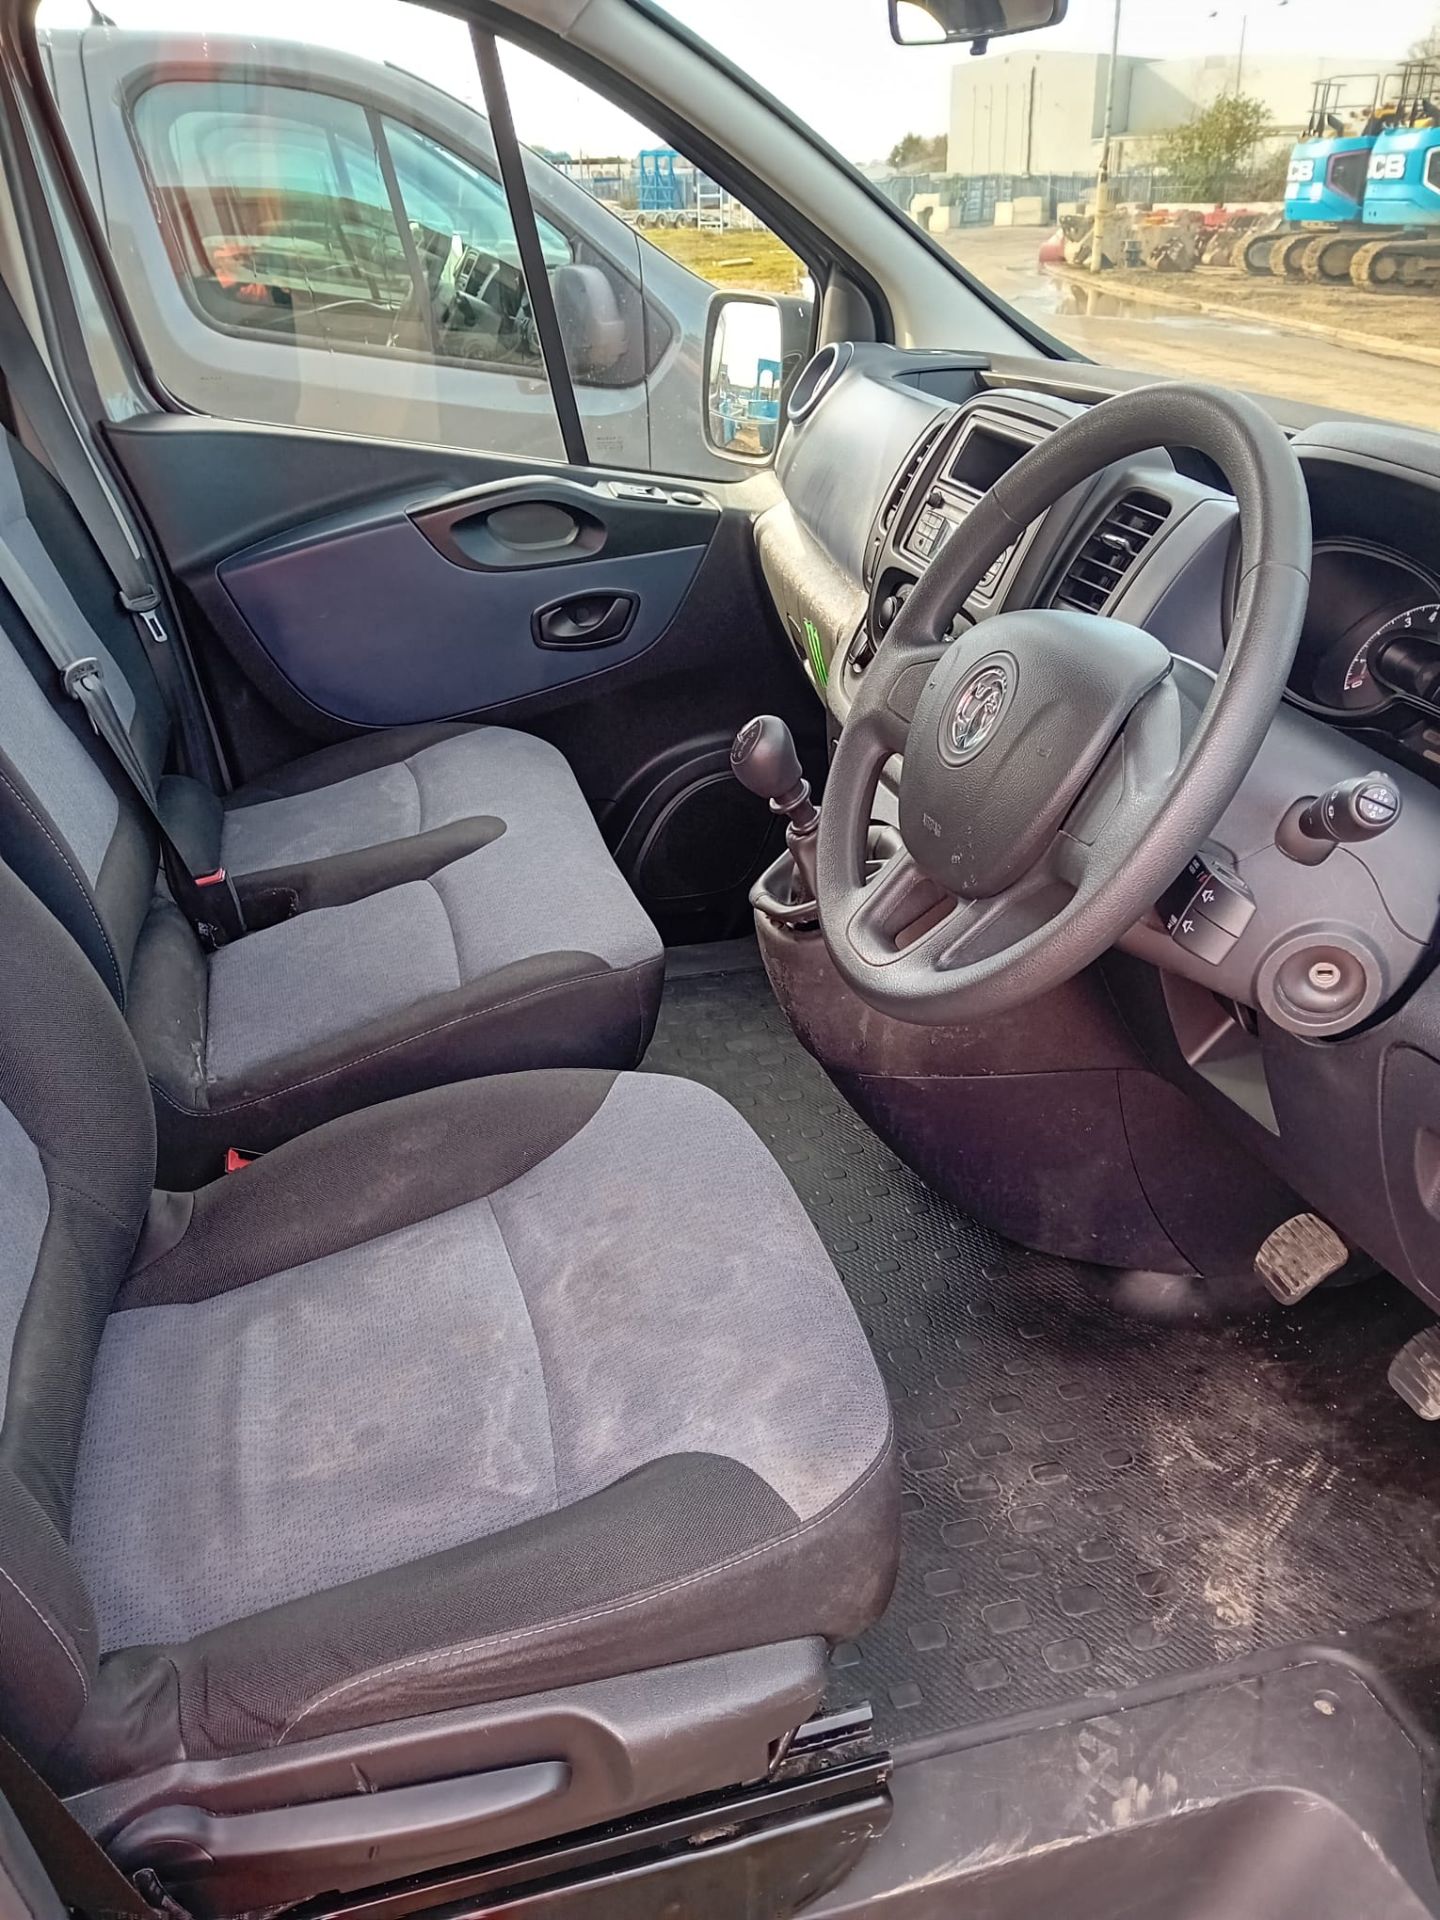 Vauxhall Vivaro 9 Seater - Image 8 of 12